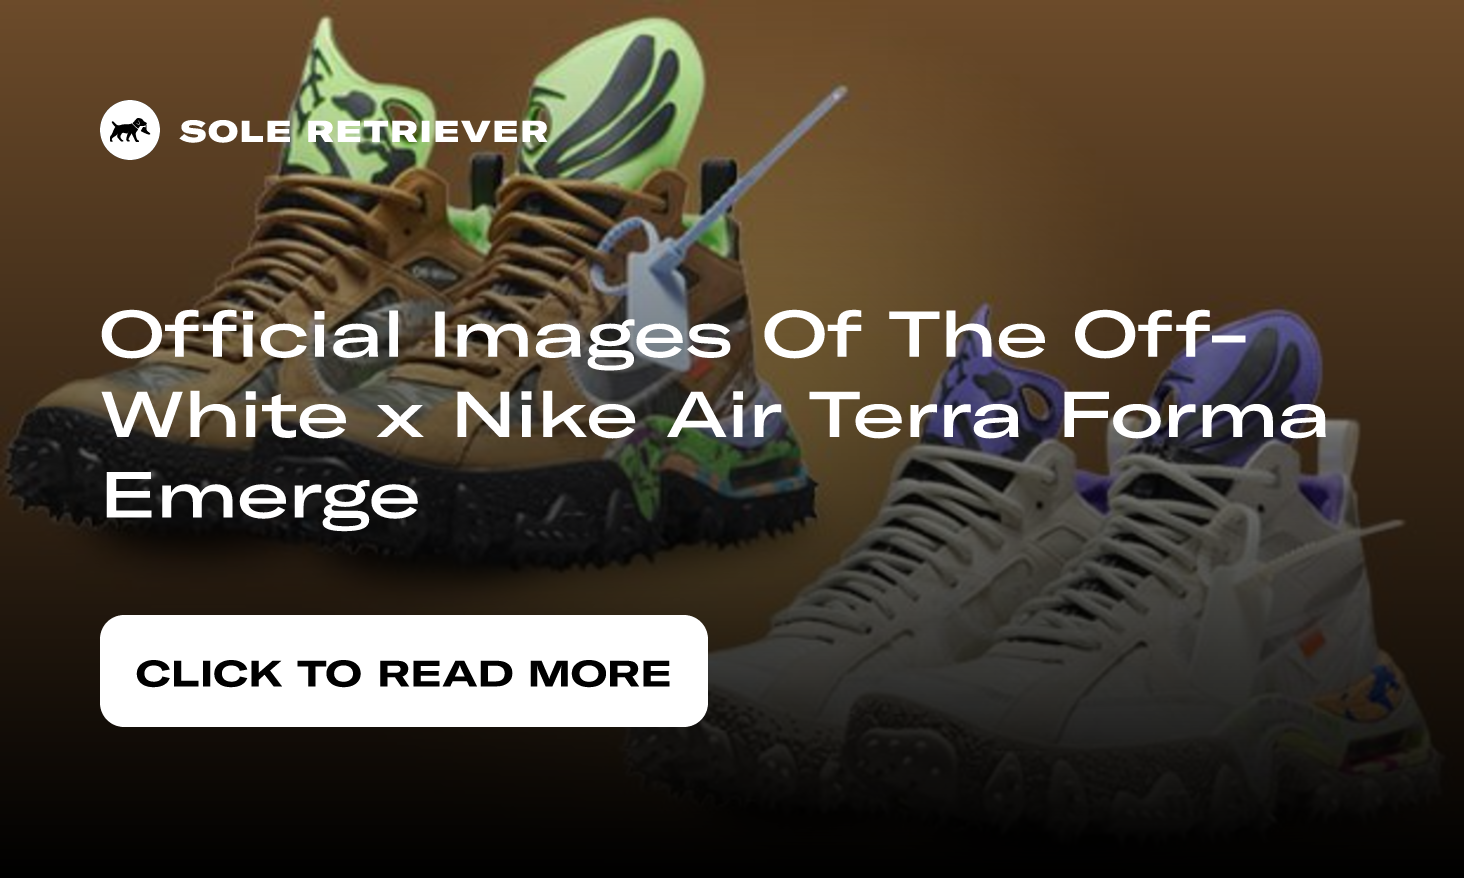 Off-White x Nike Air Terra Forma Release Date